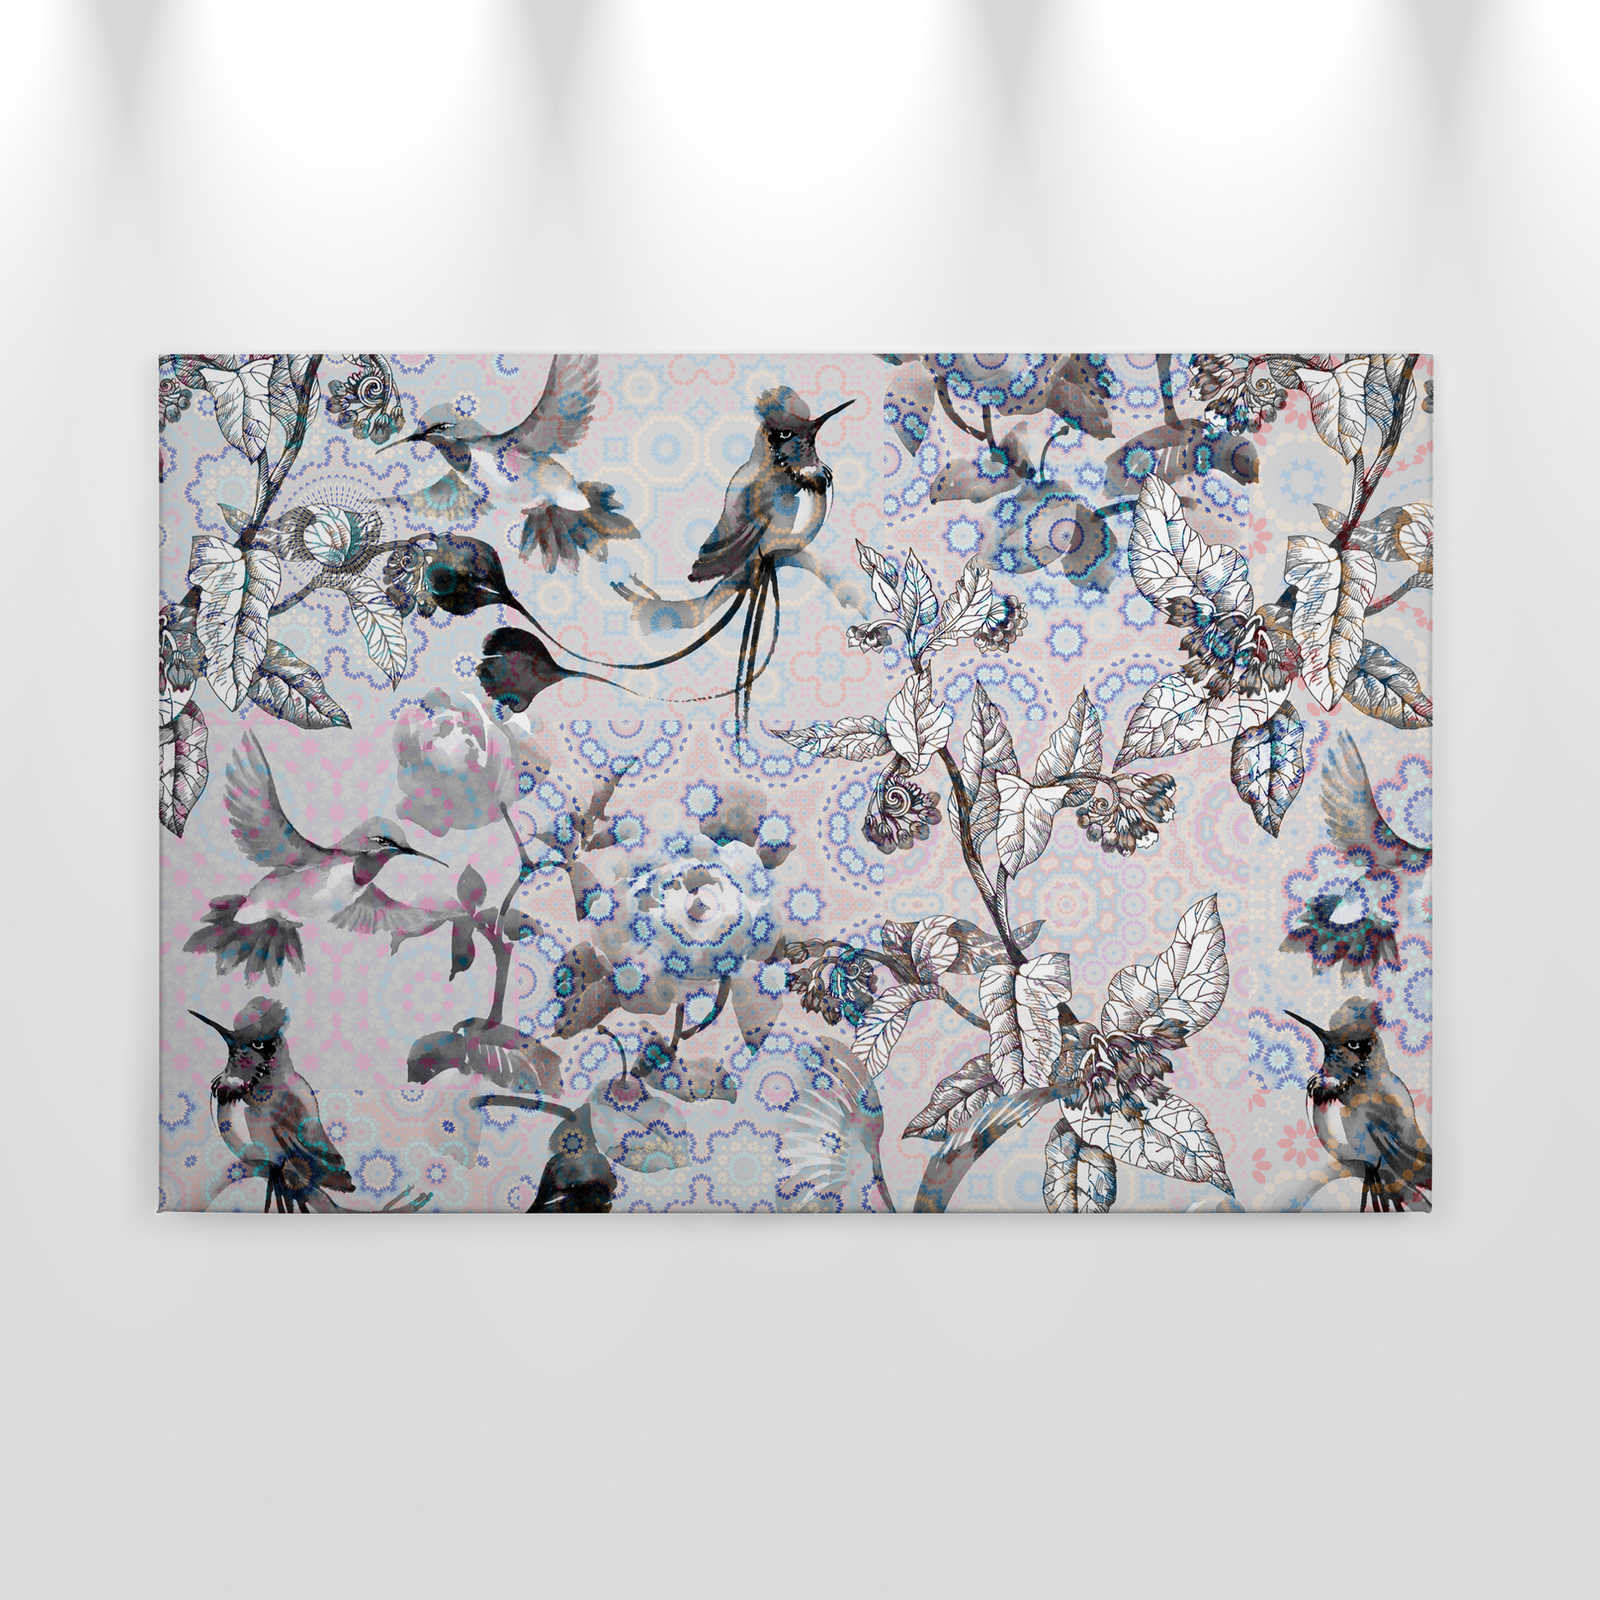             Cuadro Naturaleza Diseño en estilo collage | mosaico exótico 3 - 0,90 m x 0,60 m
        